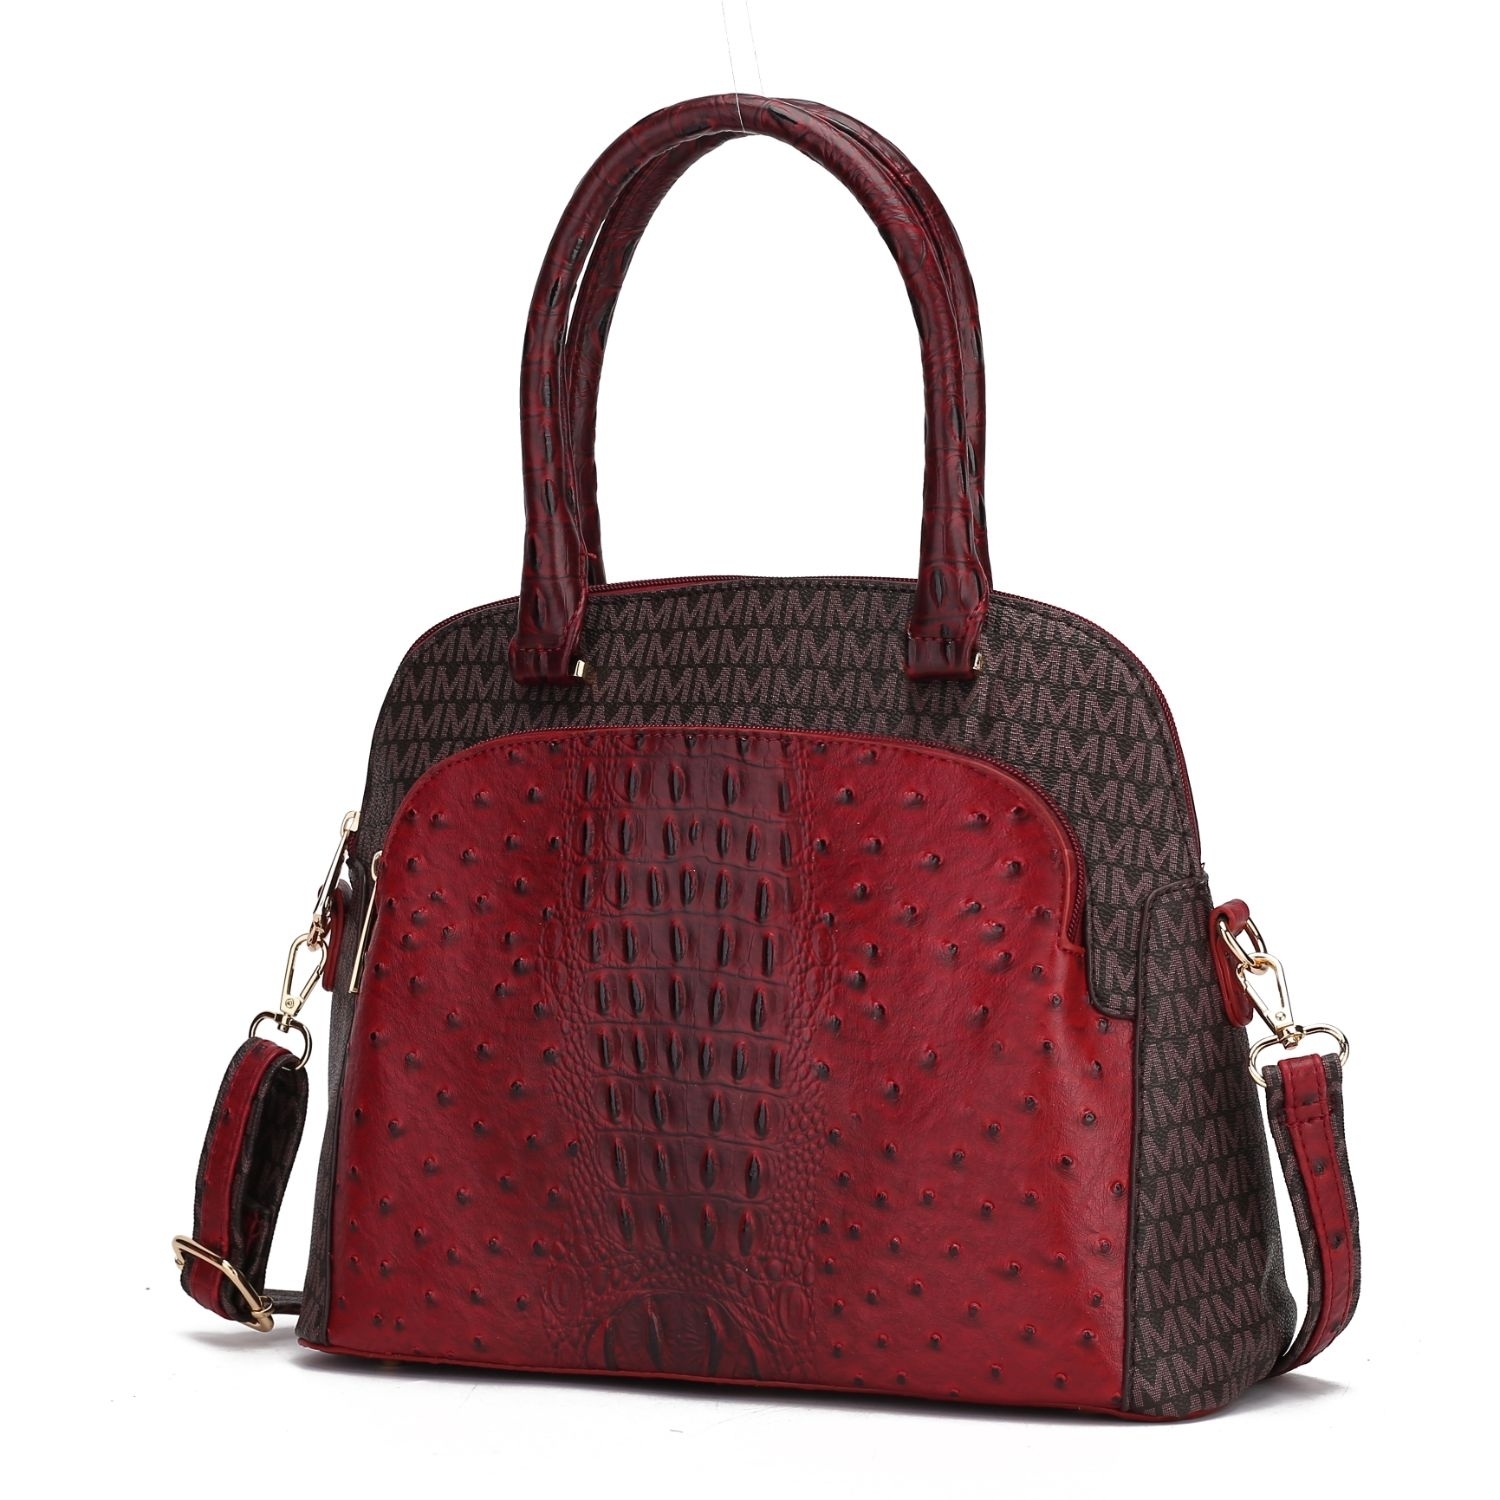 MKF Collection Fiona Tote Handbag By Mia K. - Red